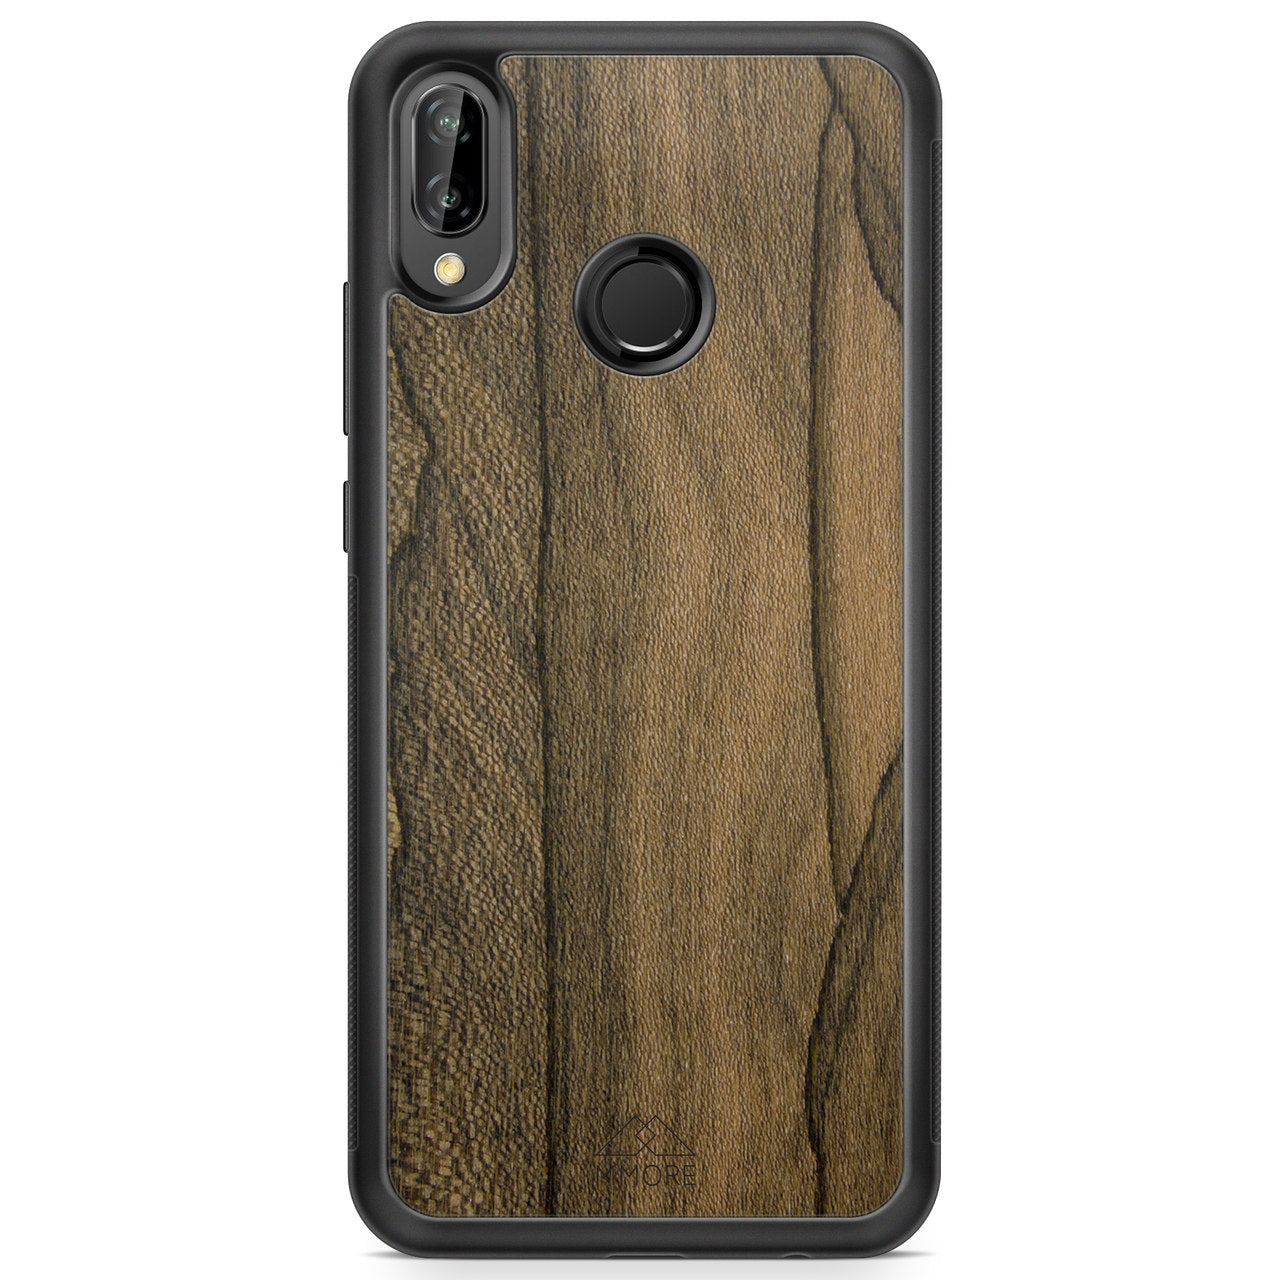  Ziricote Wood Huawei P20 Lite Phone Case 